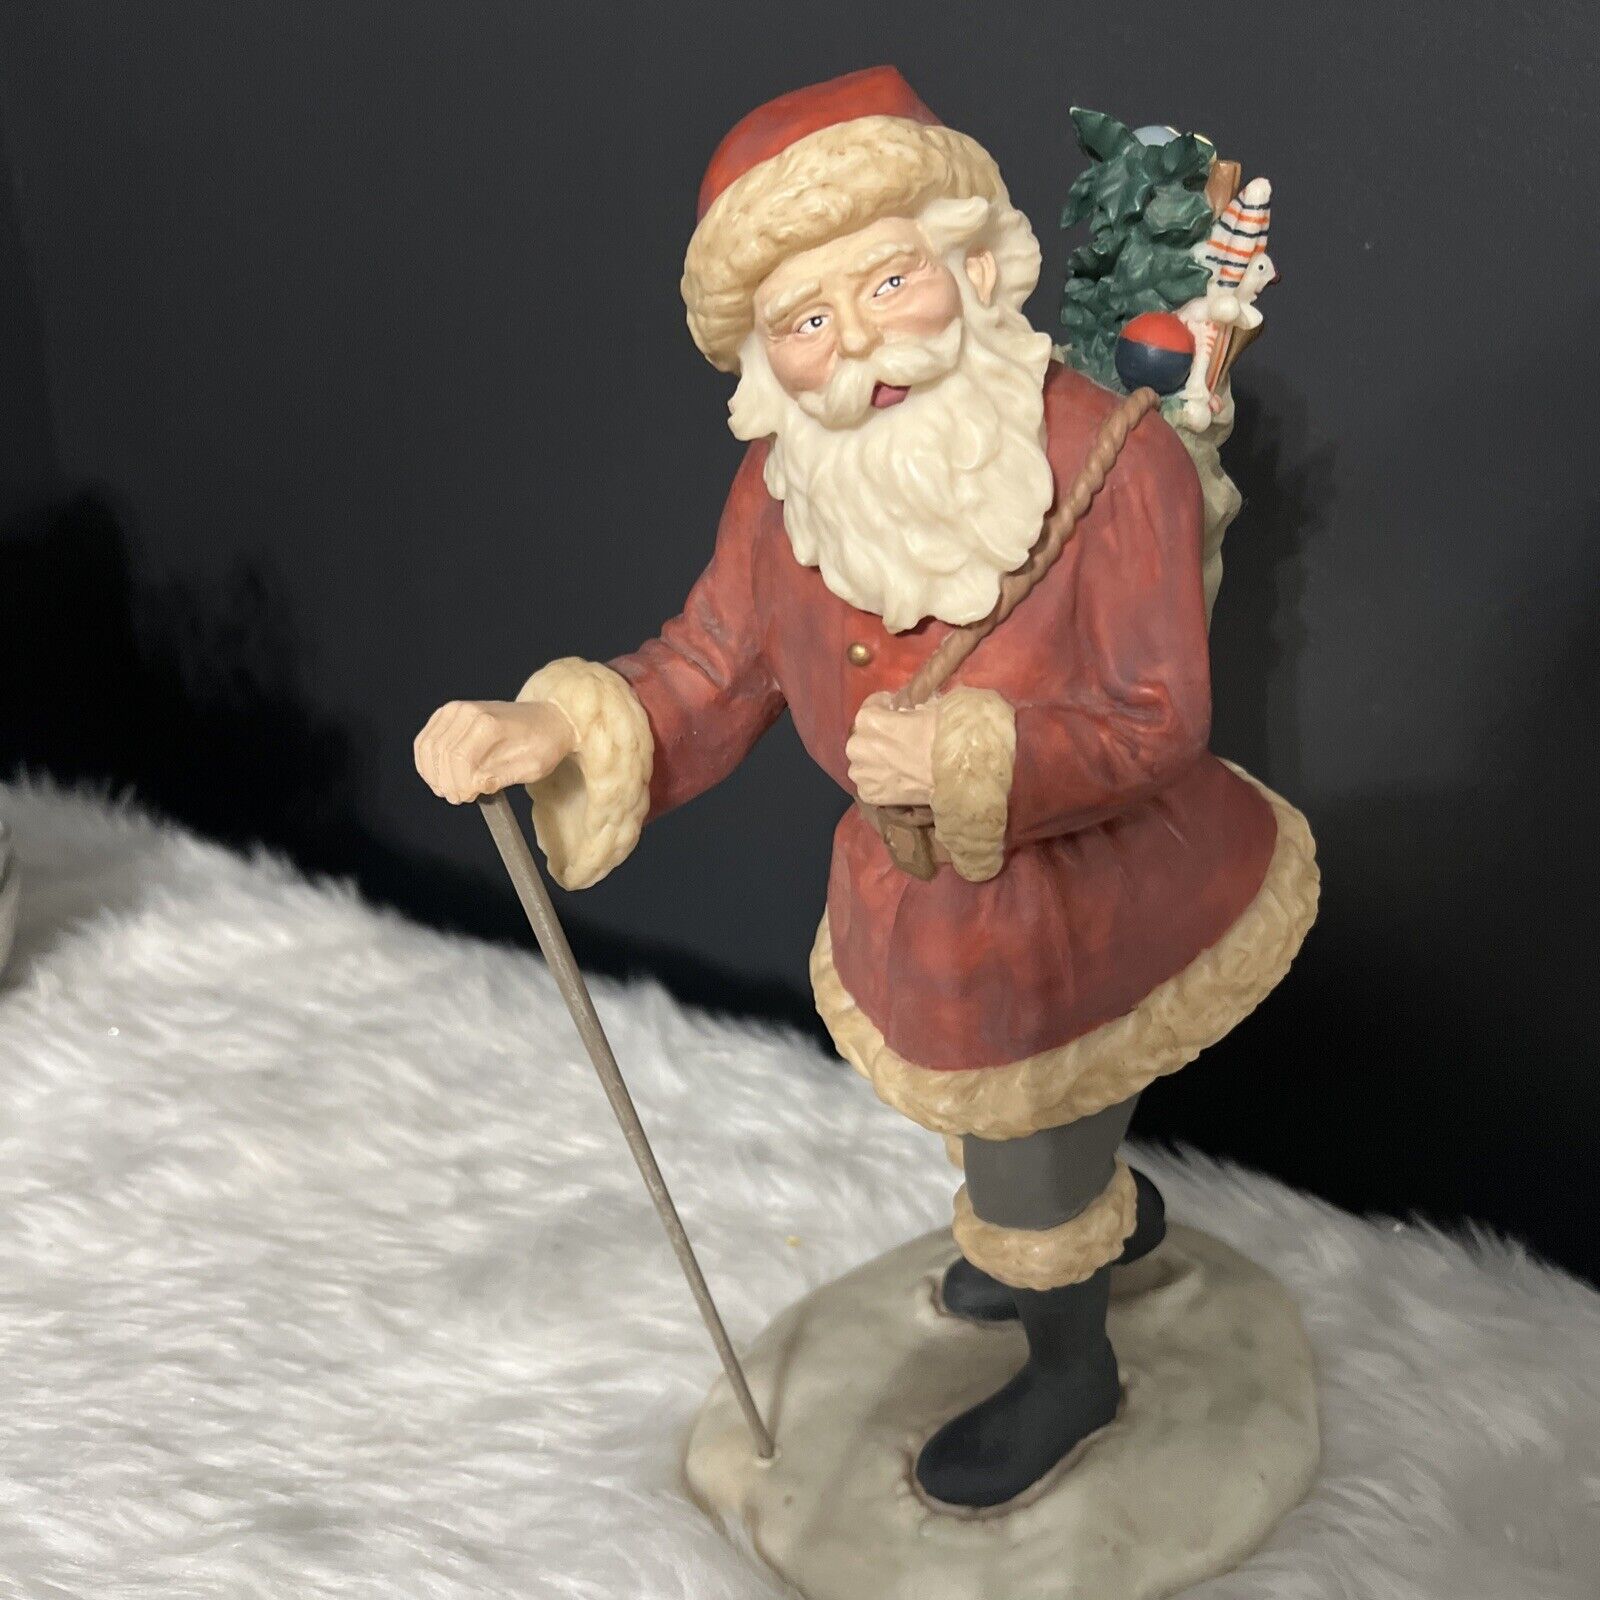 Hallmark Heirloom Santa Collection A Merrie Christmas Sculptured By Duane Unruh